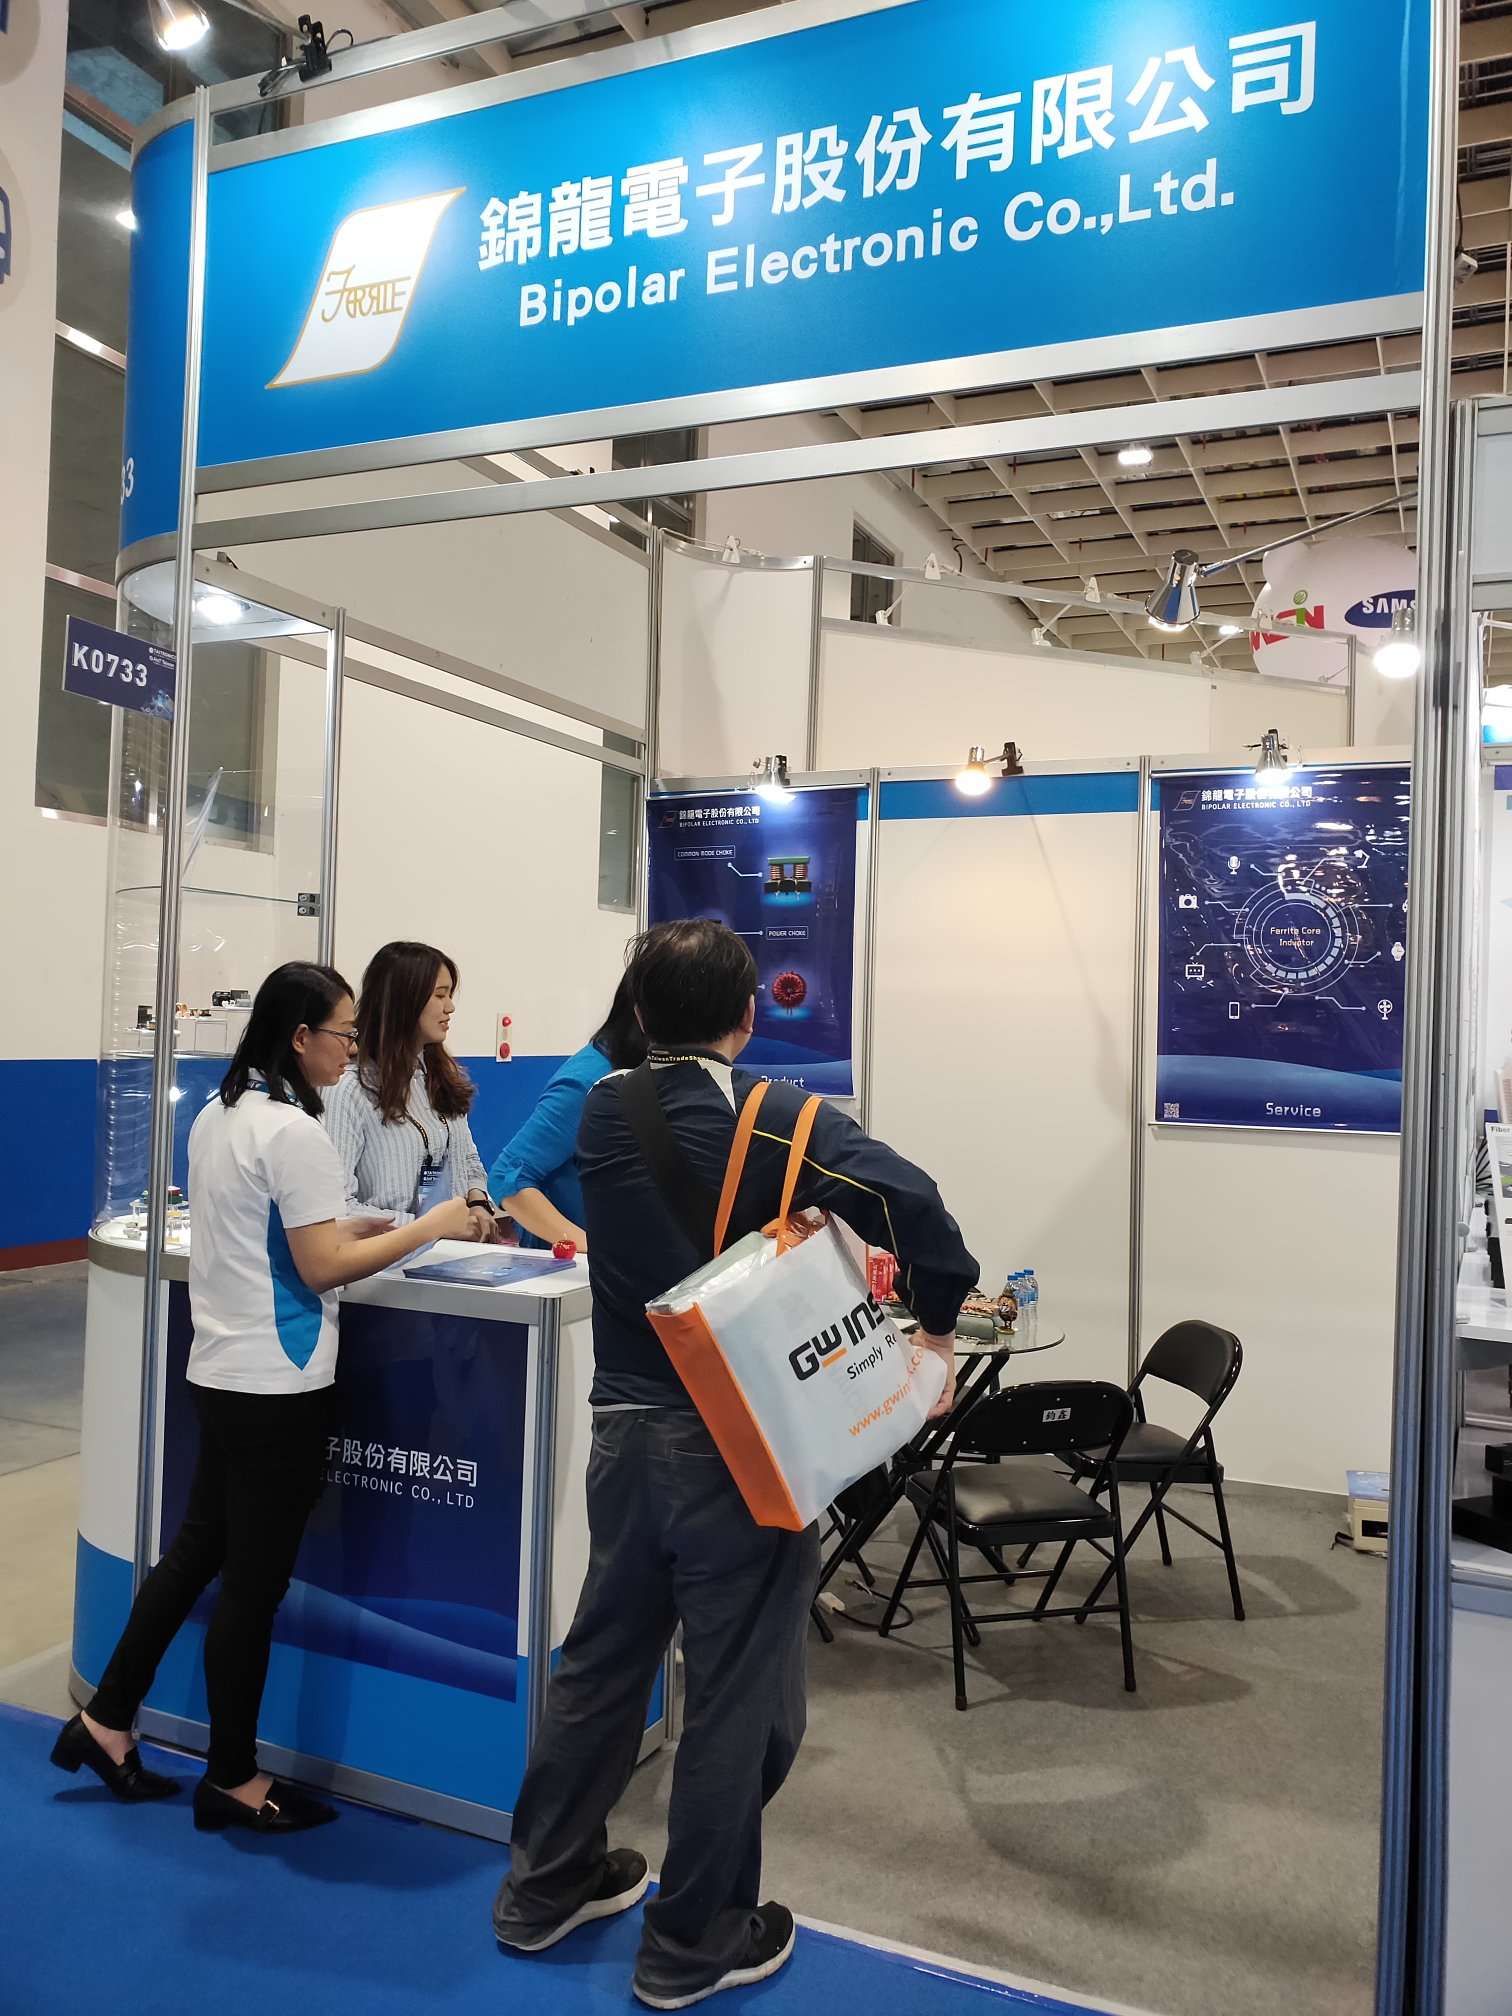 Bipolar Electronic Co., Ltd.